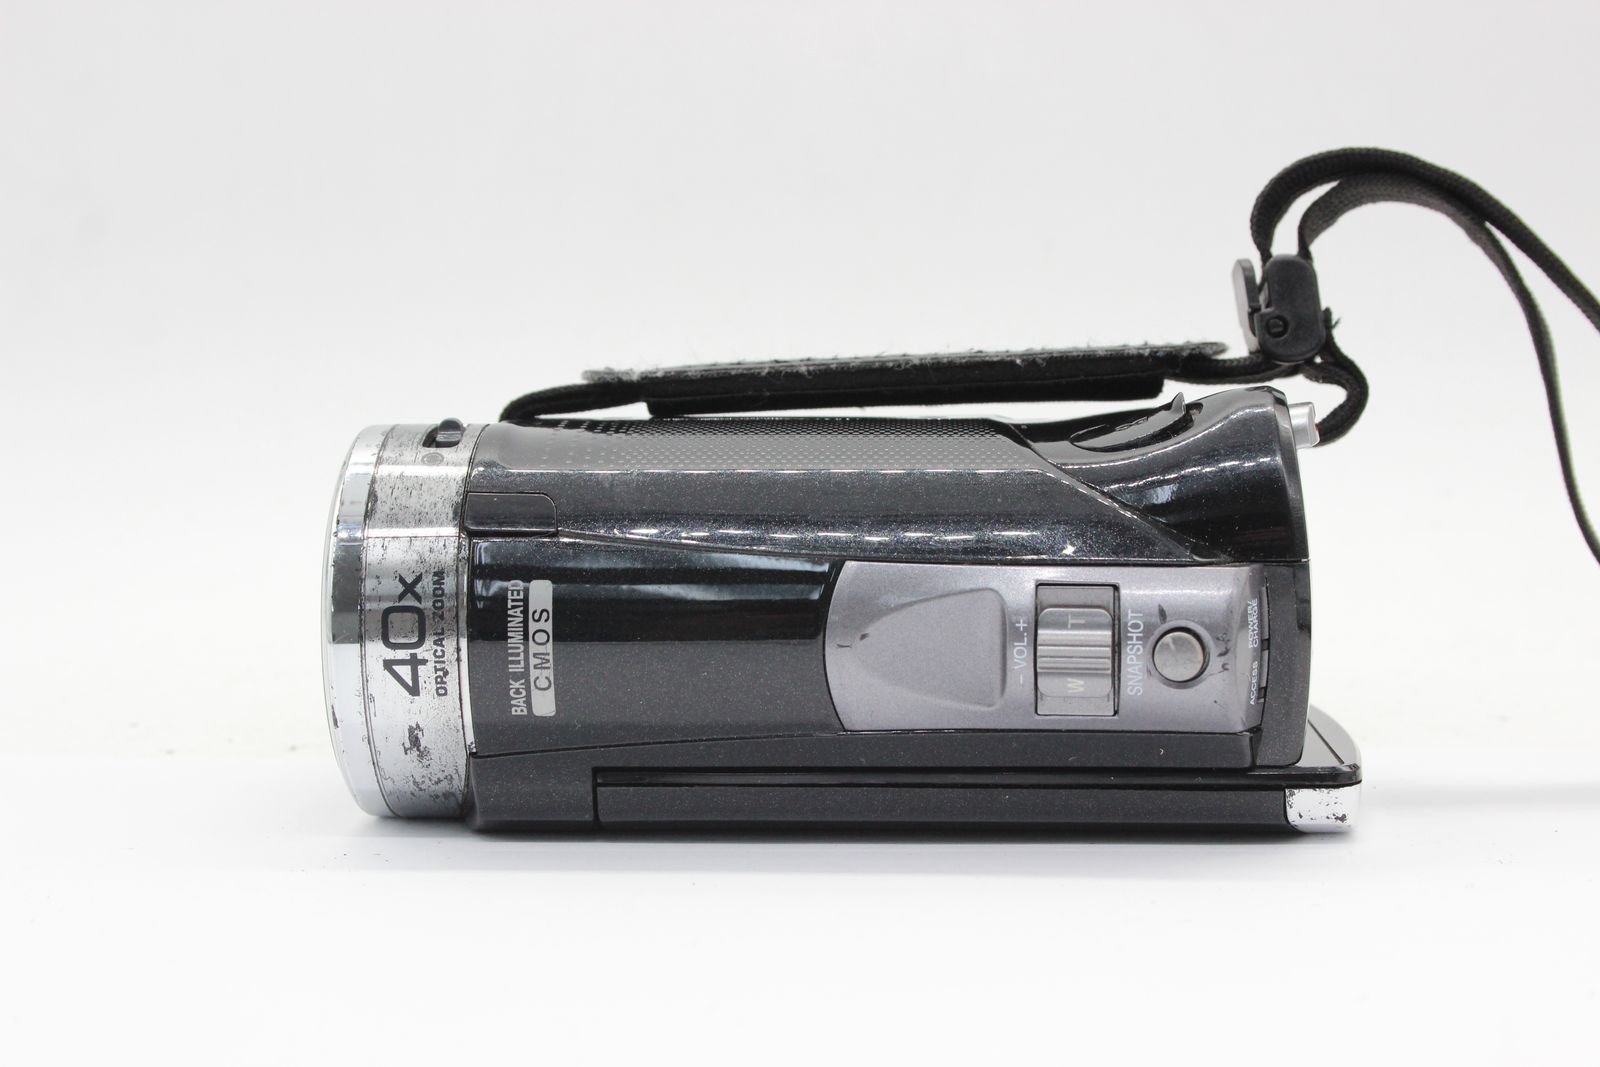 JVCビデオカメラ GZ-HM33-B ブラック ジャンク品 - ビデオカメラ